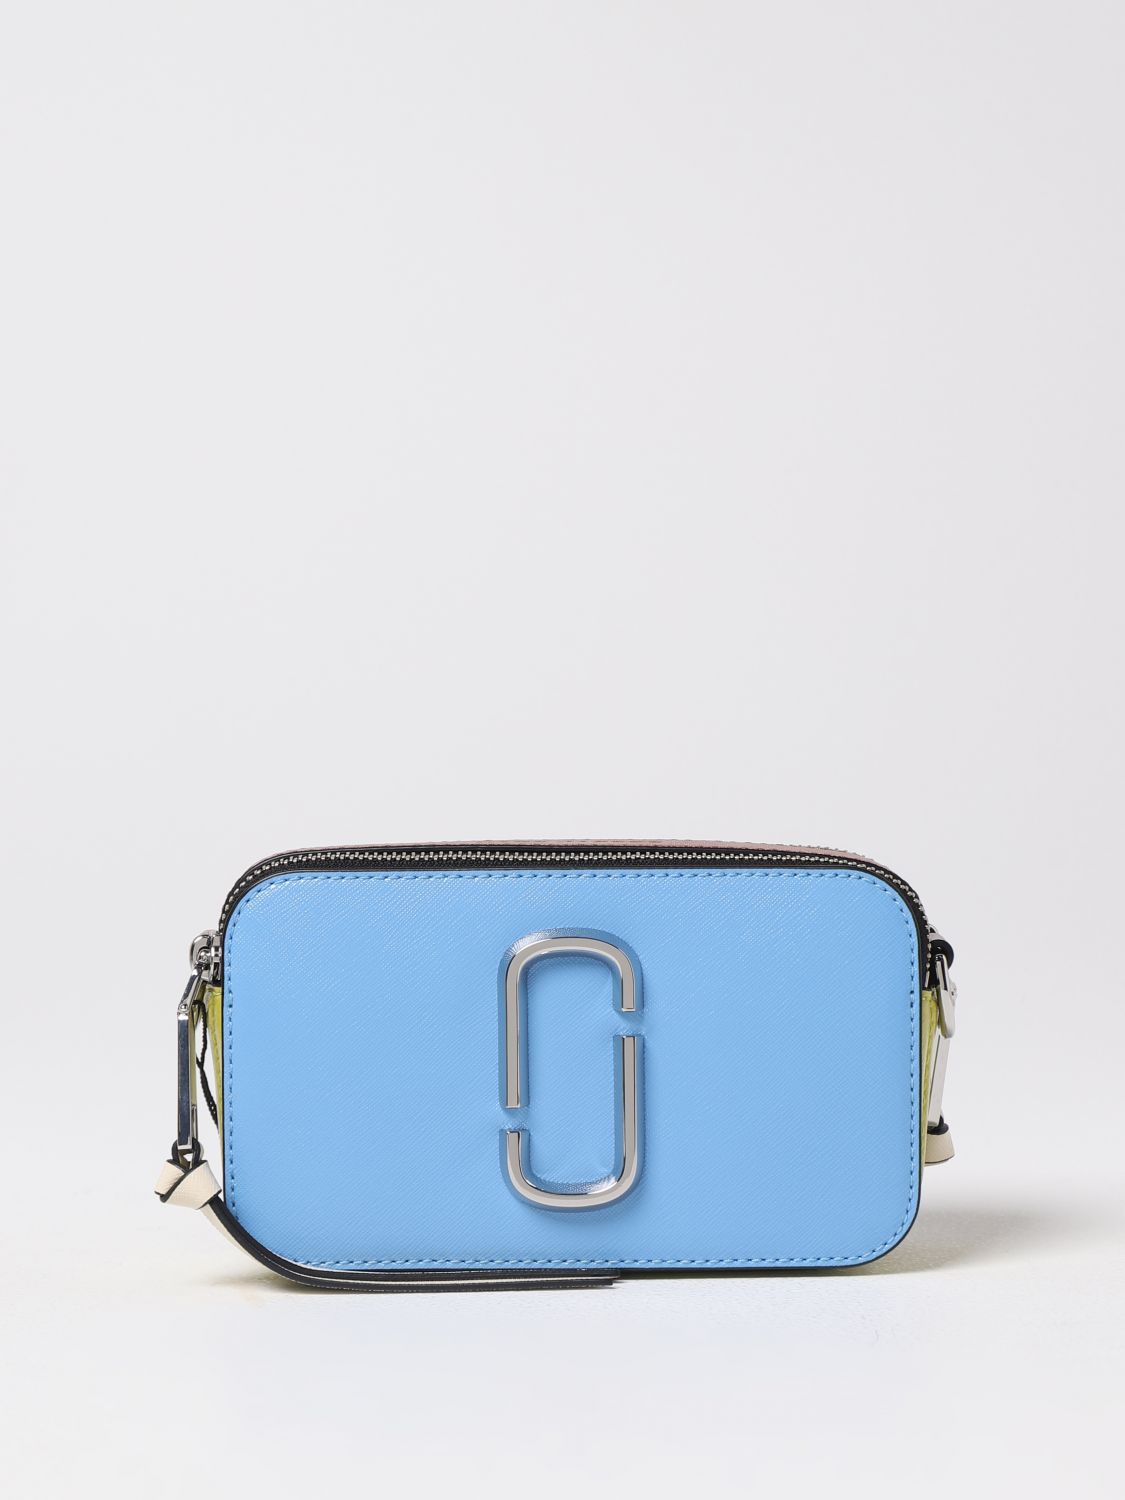 MARC JACOBS: handbag for woman - Blue | Marc Jacobs handbag ...